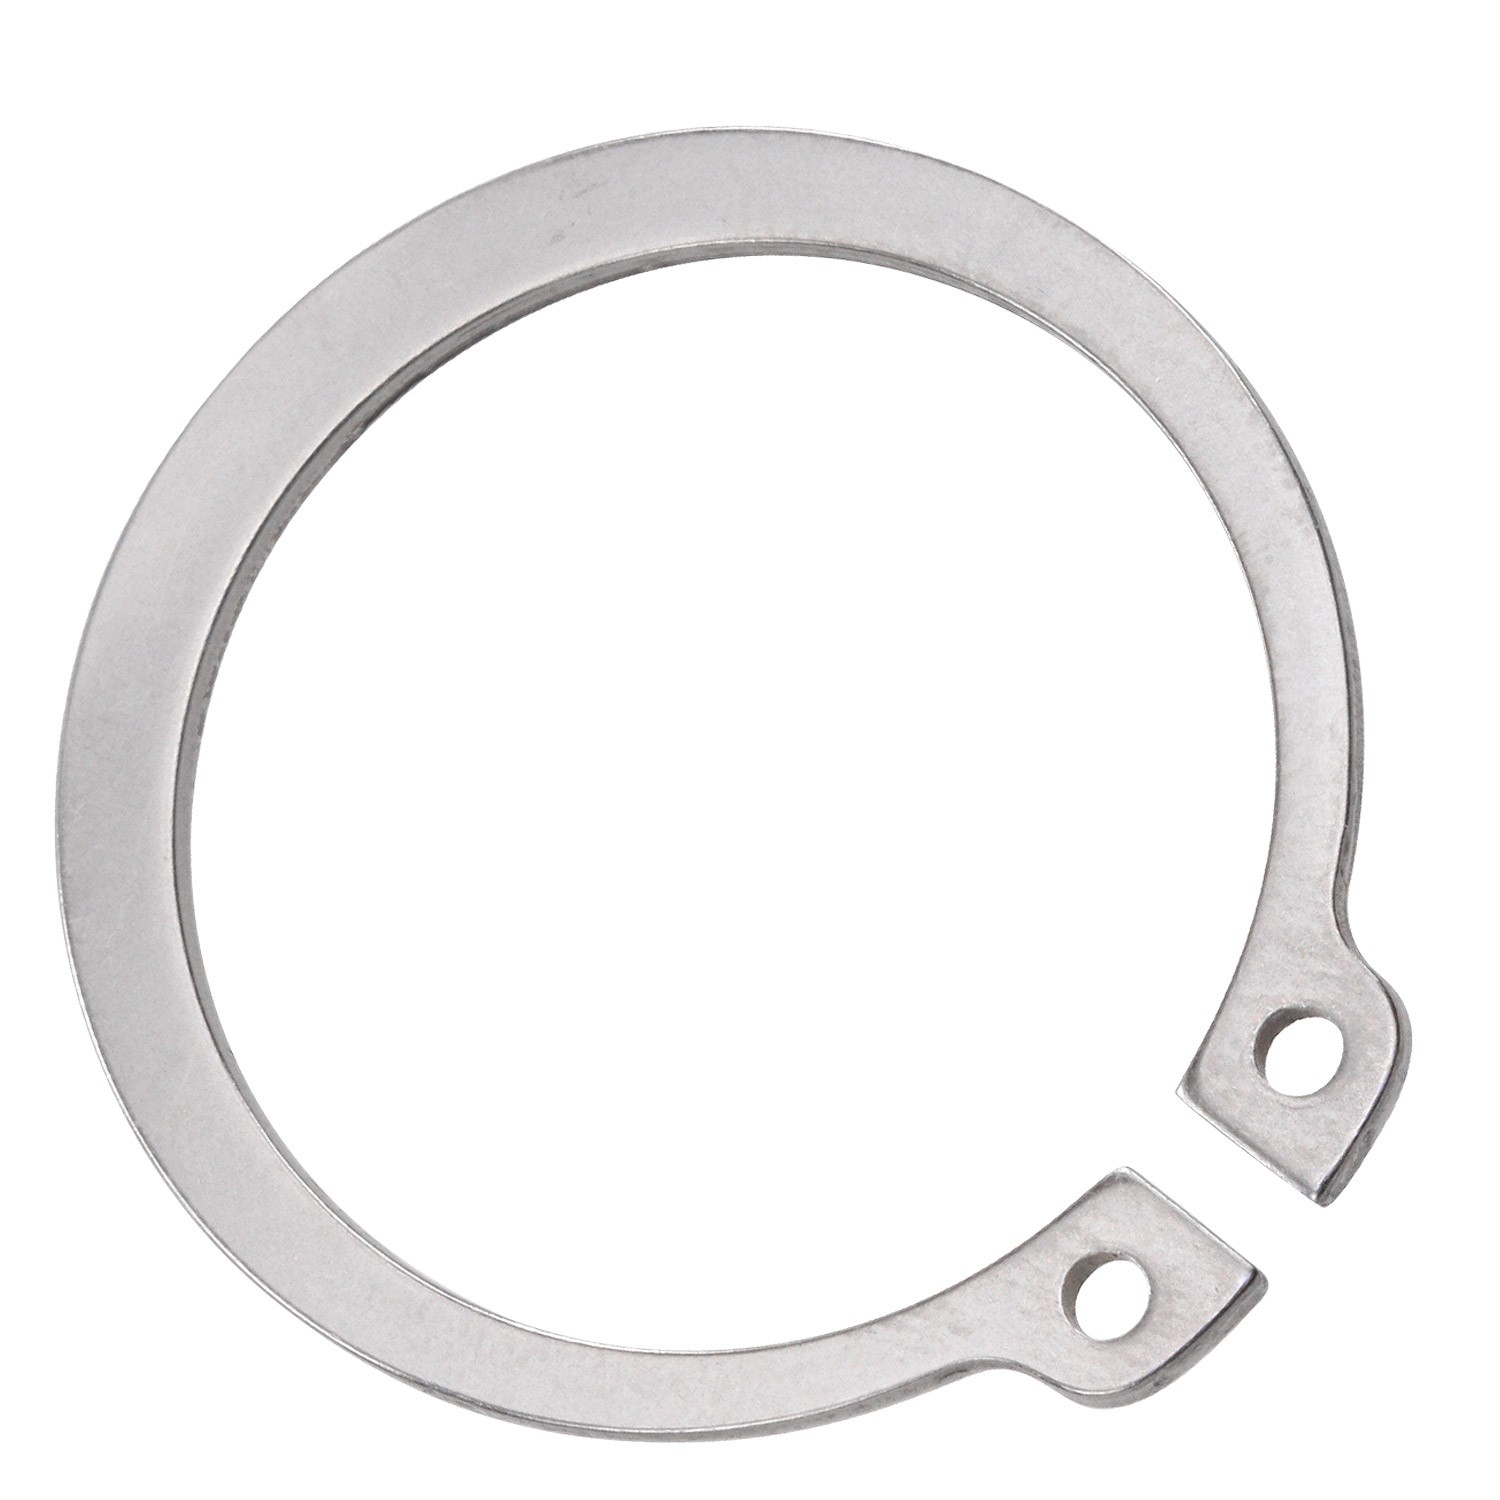 Кольцо стопорное наружное 80х2,5 DIN 471, нержавеющая сталь 1.4122 (А2) - фото